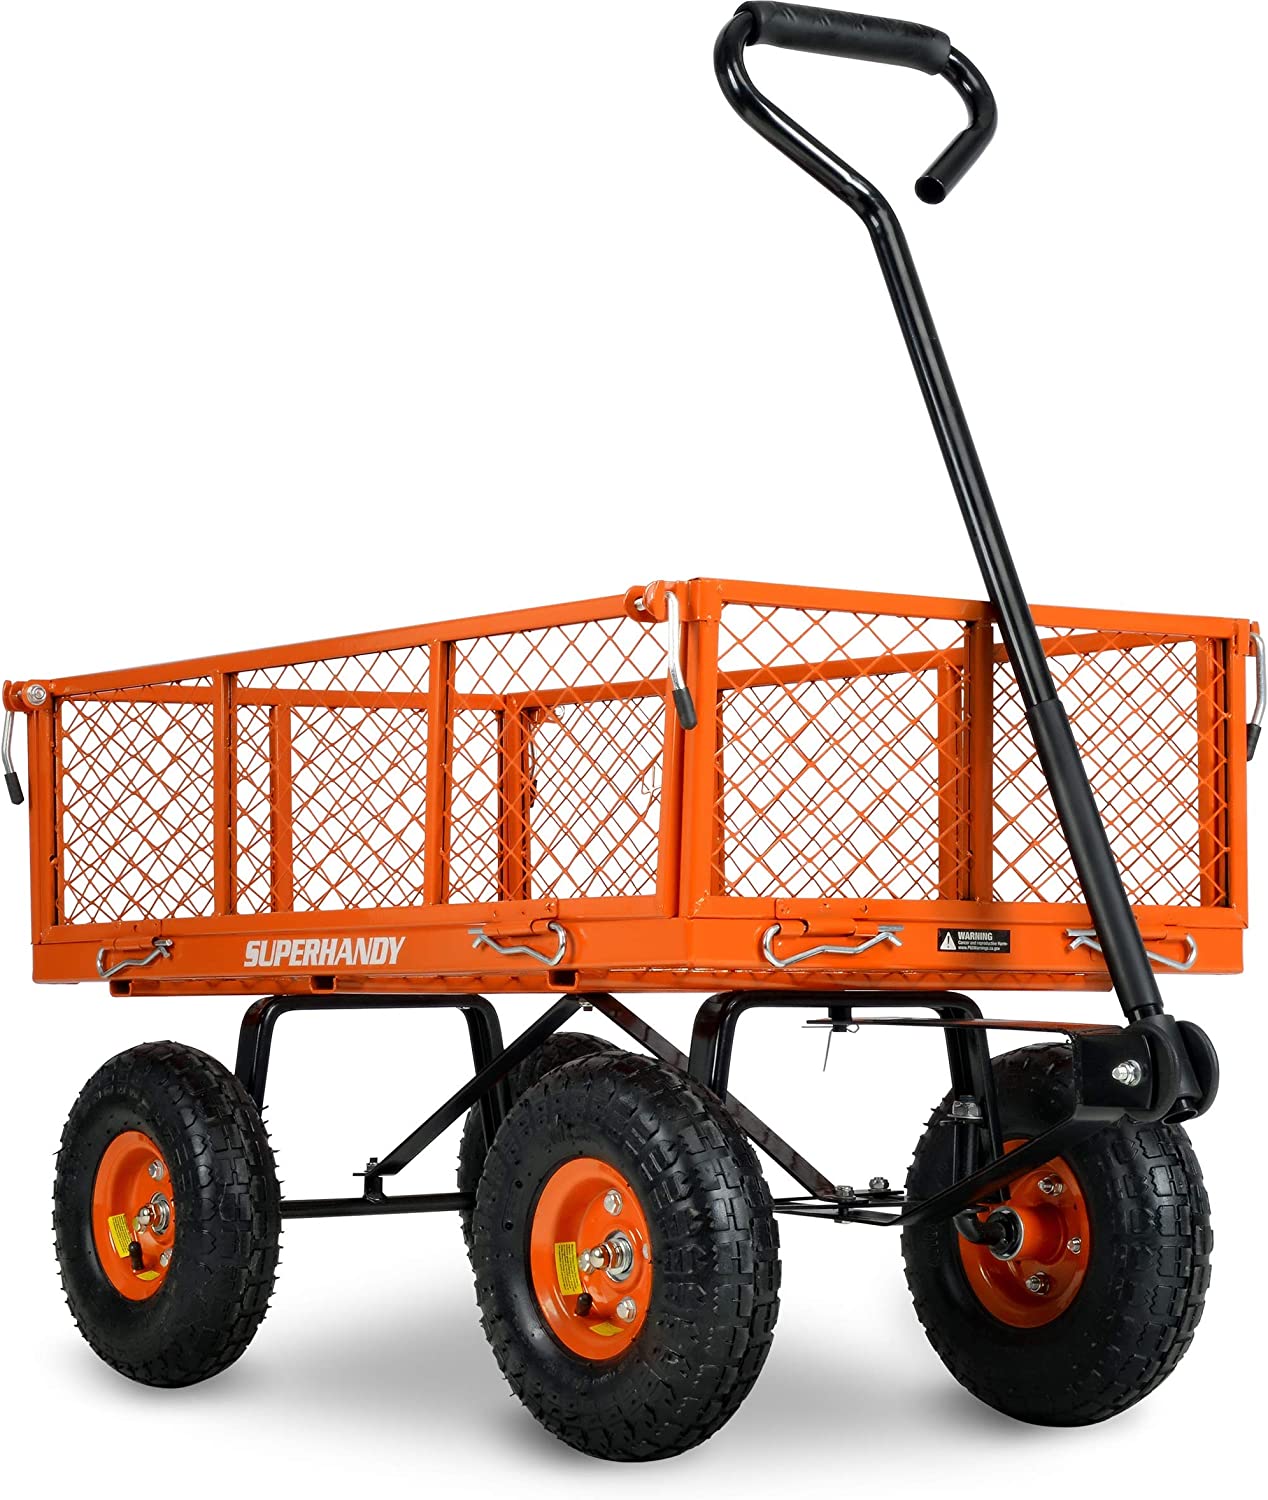 SuperHandy Utility Wagon / Yard Cart, w/ All Terrain Tires, Folding Side Panels, 400 lbs Capacity, for Outdoor, Garden, Beach, Construction, Wood Hauling